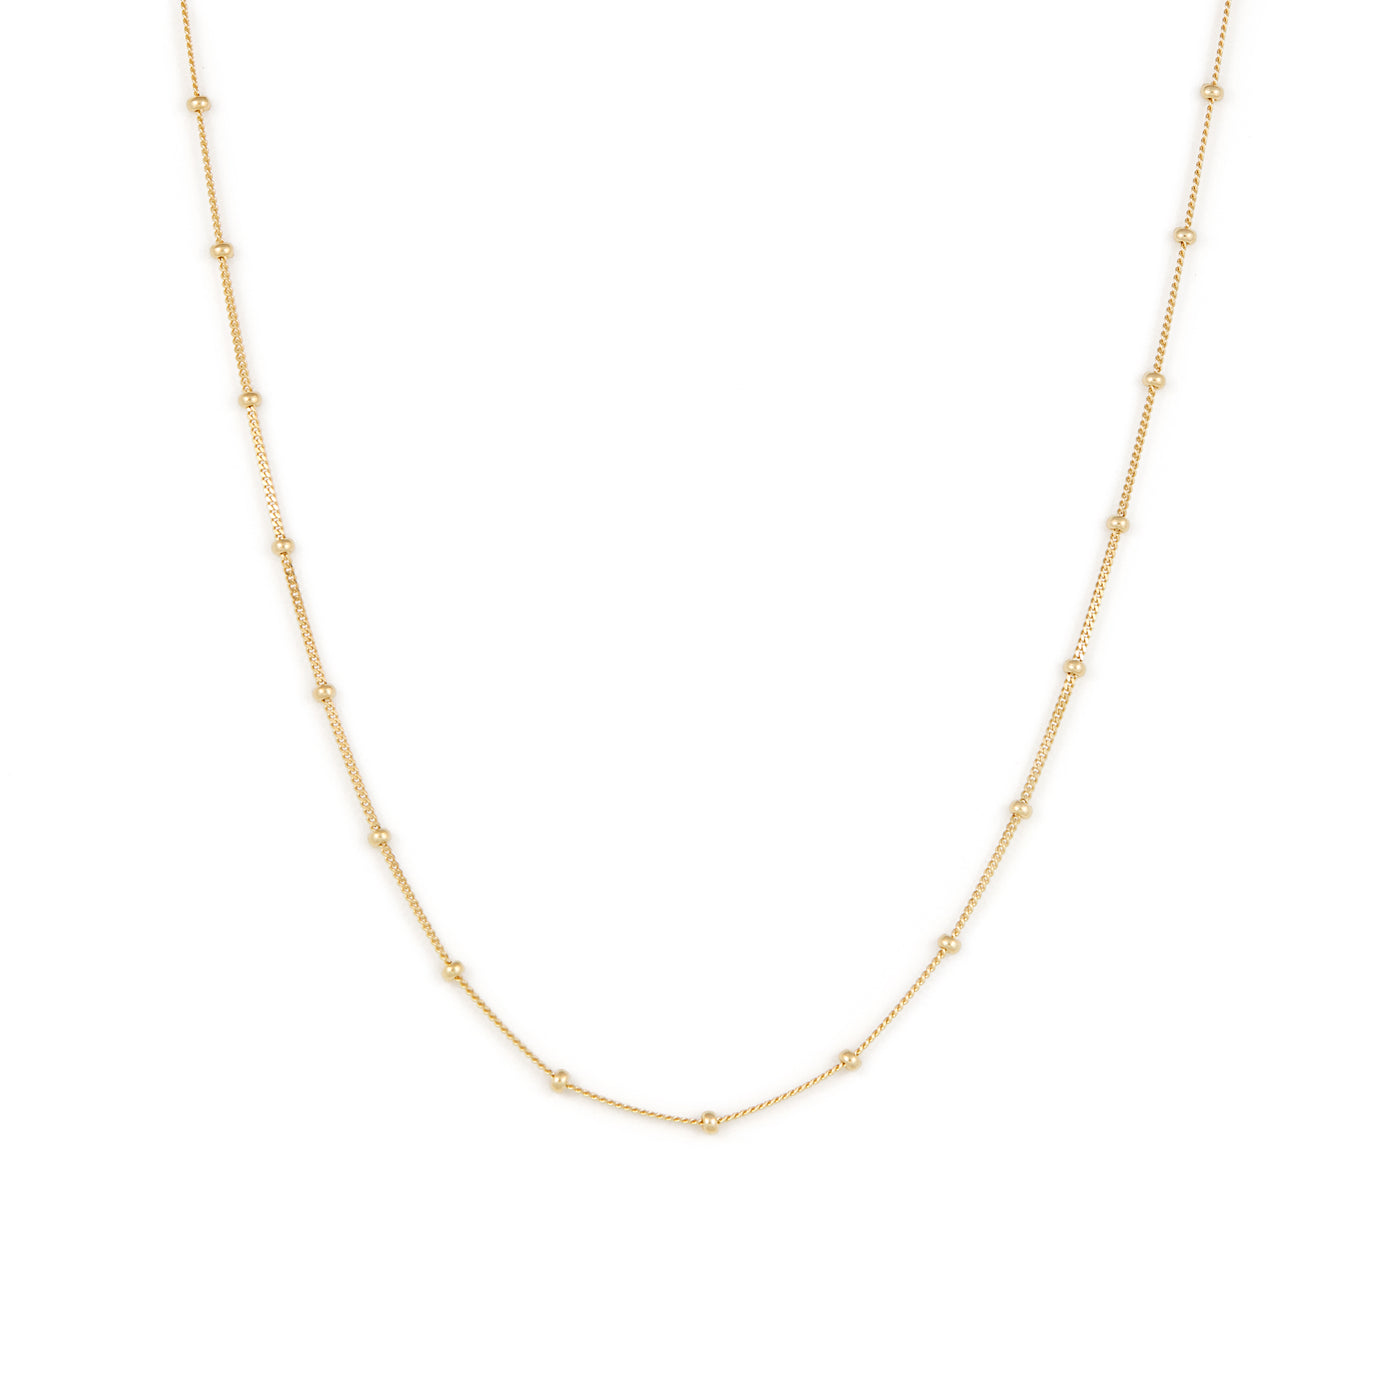 Satellite Necklace - 10 Karat Gold